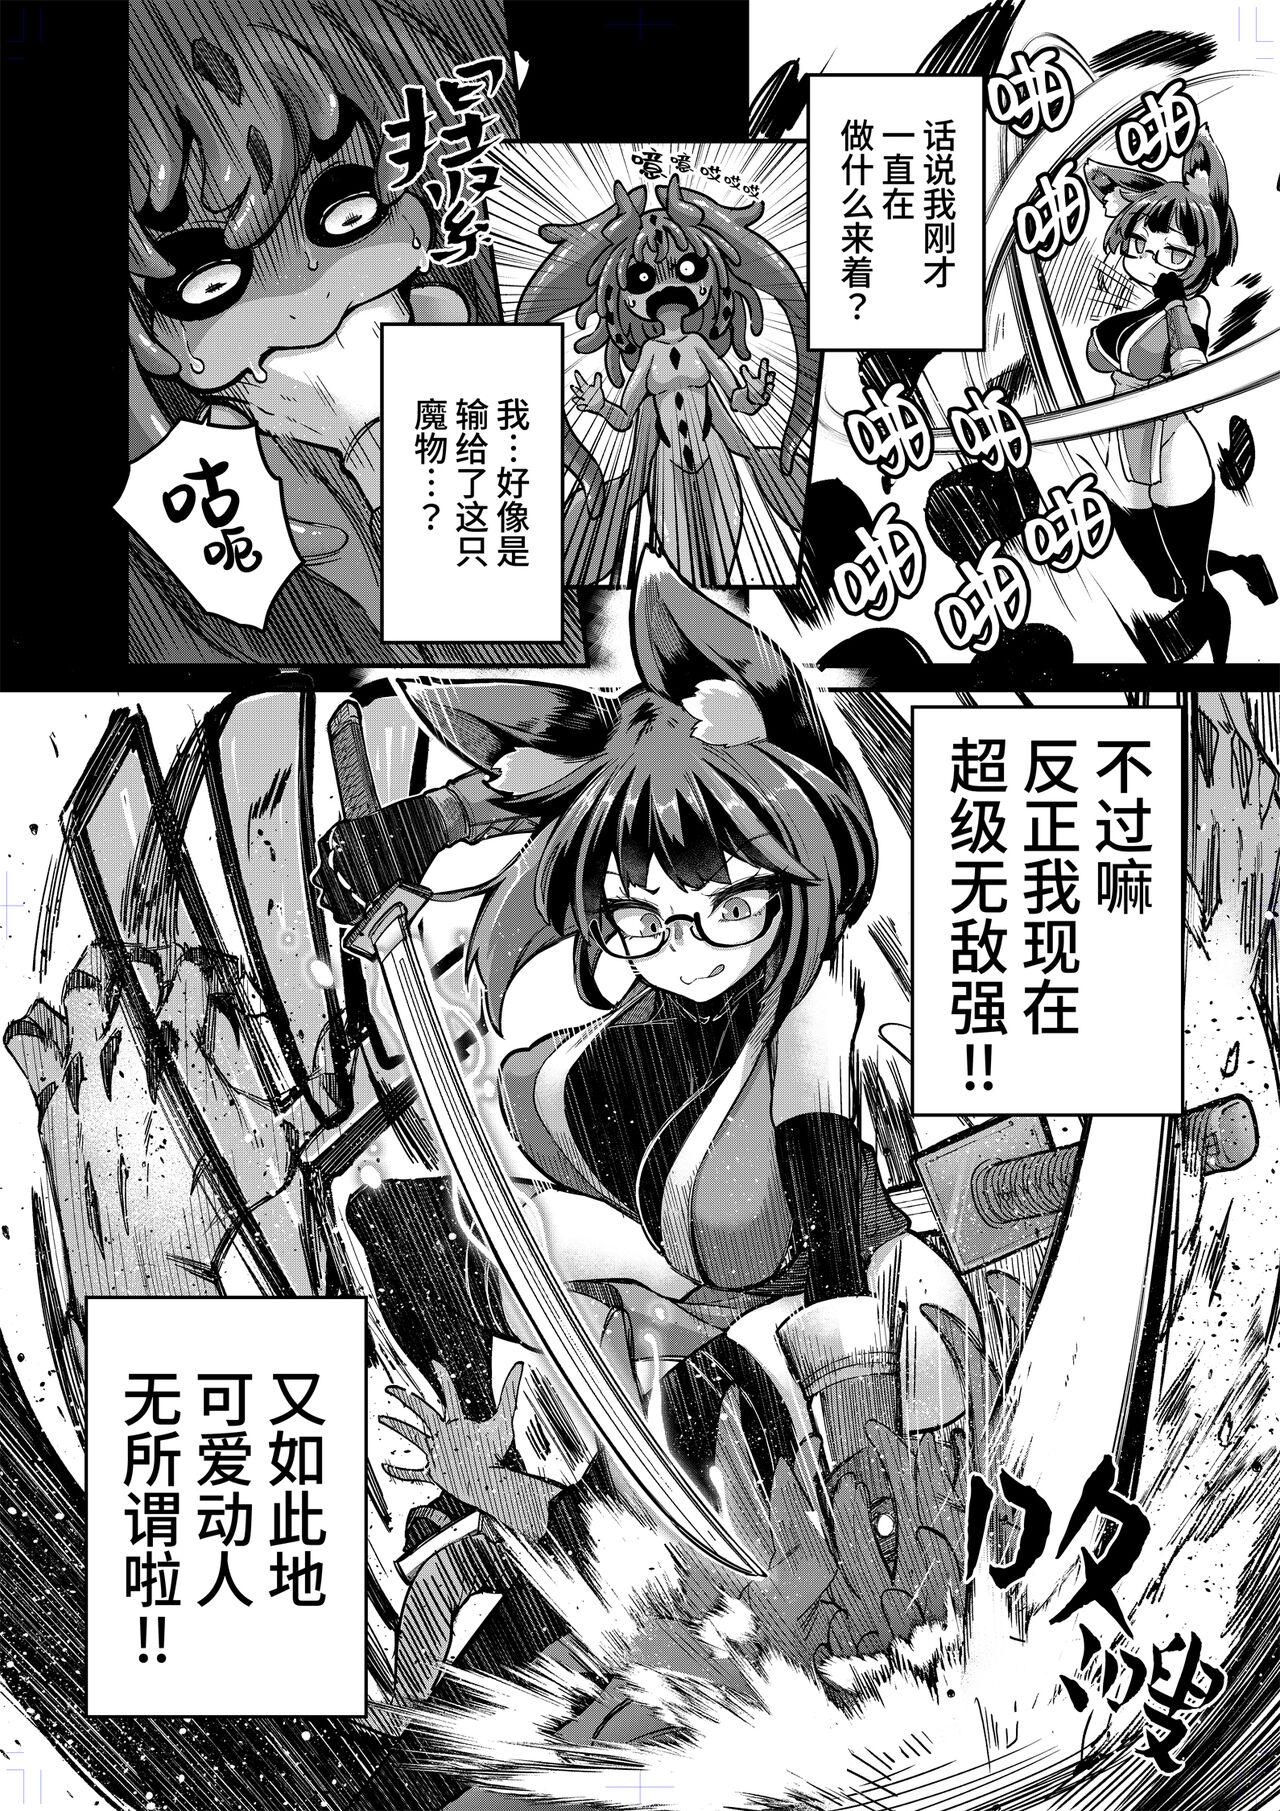 Reginetta-san vs Jashin Dungeon 2 12